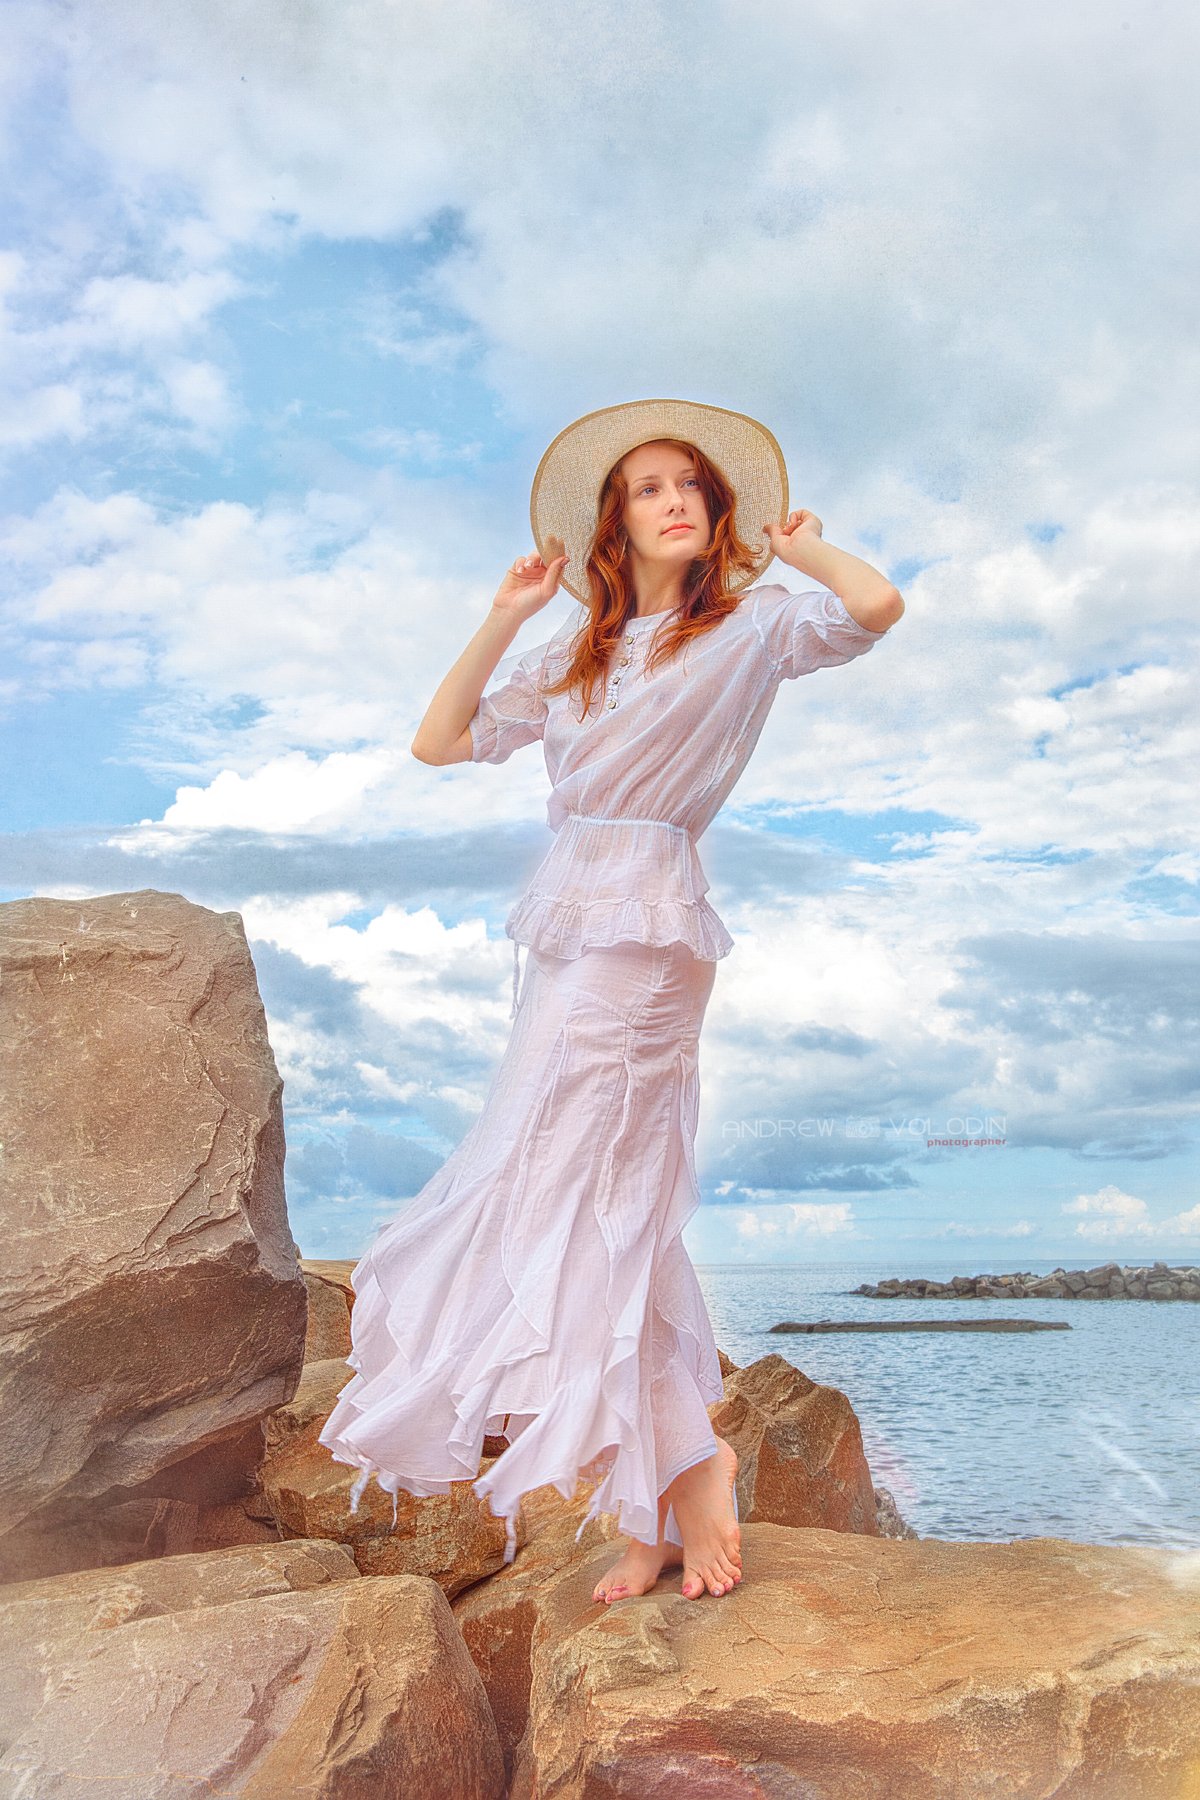 девушка море платье шляпка бриз красиво ветер камни небо облака, Андрей Володин